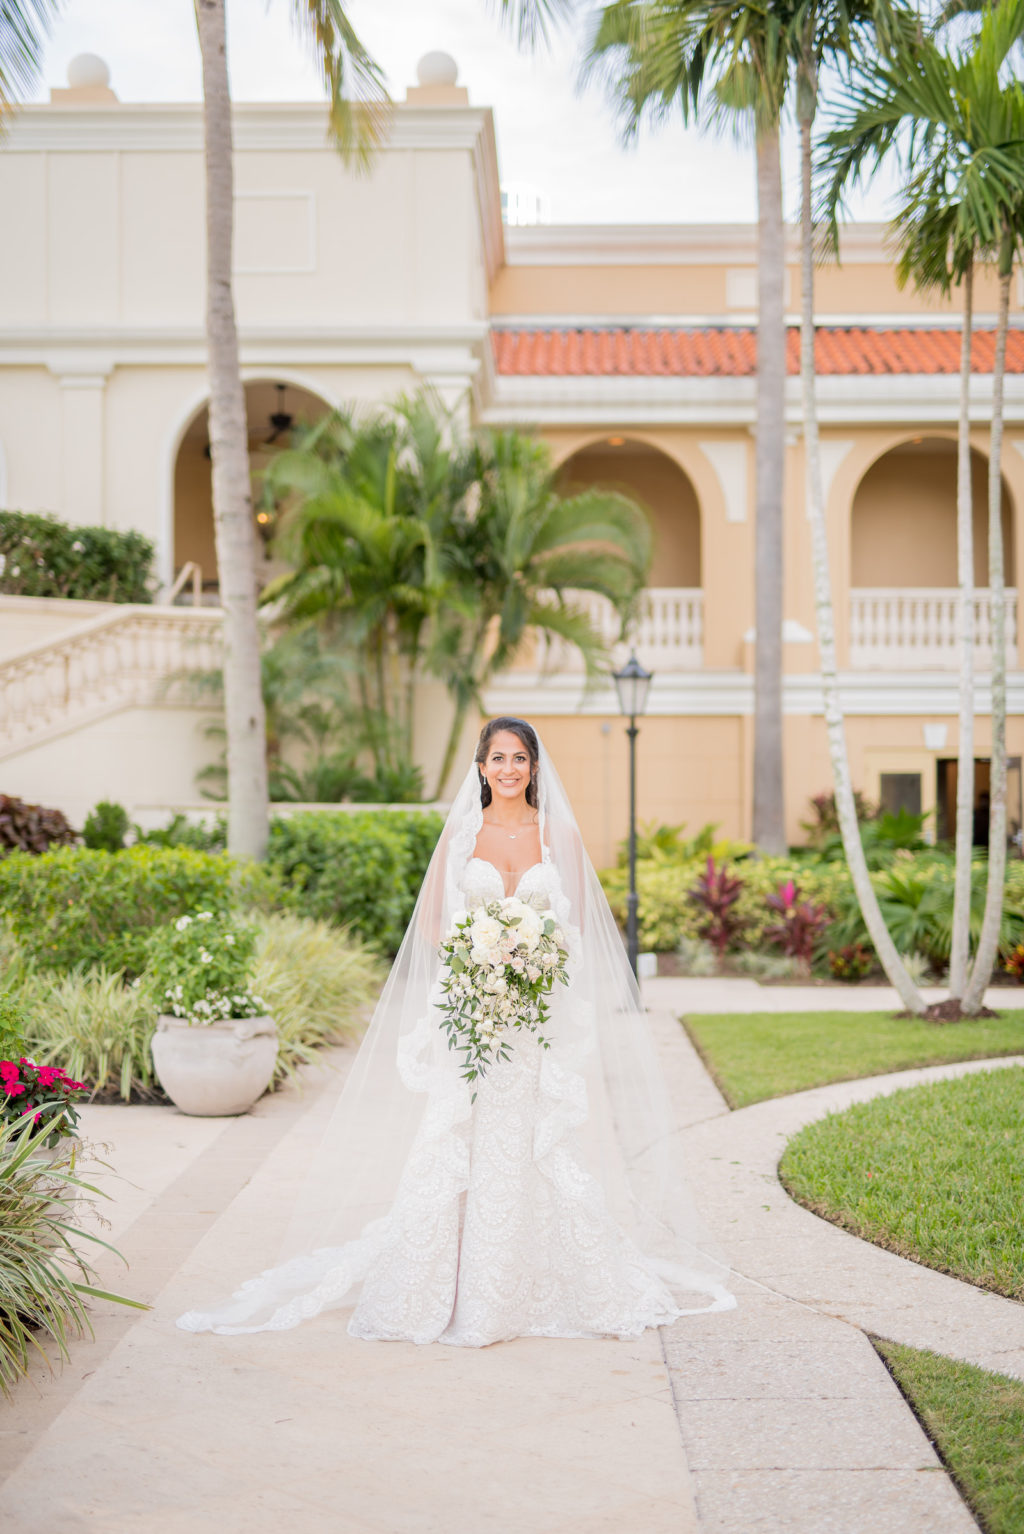 Elegant Classic Bride in Mermaid Strapless Wedding Dress and Full Length Lace Veil | Tampa Bay Wedding Photographer Kera Photography | Ritz Carlton Sarasota Wedding